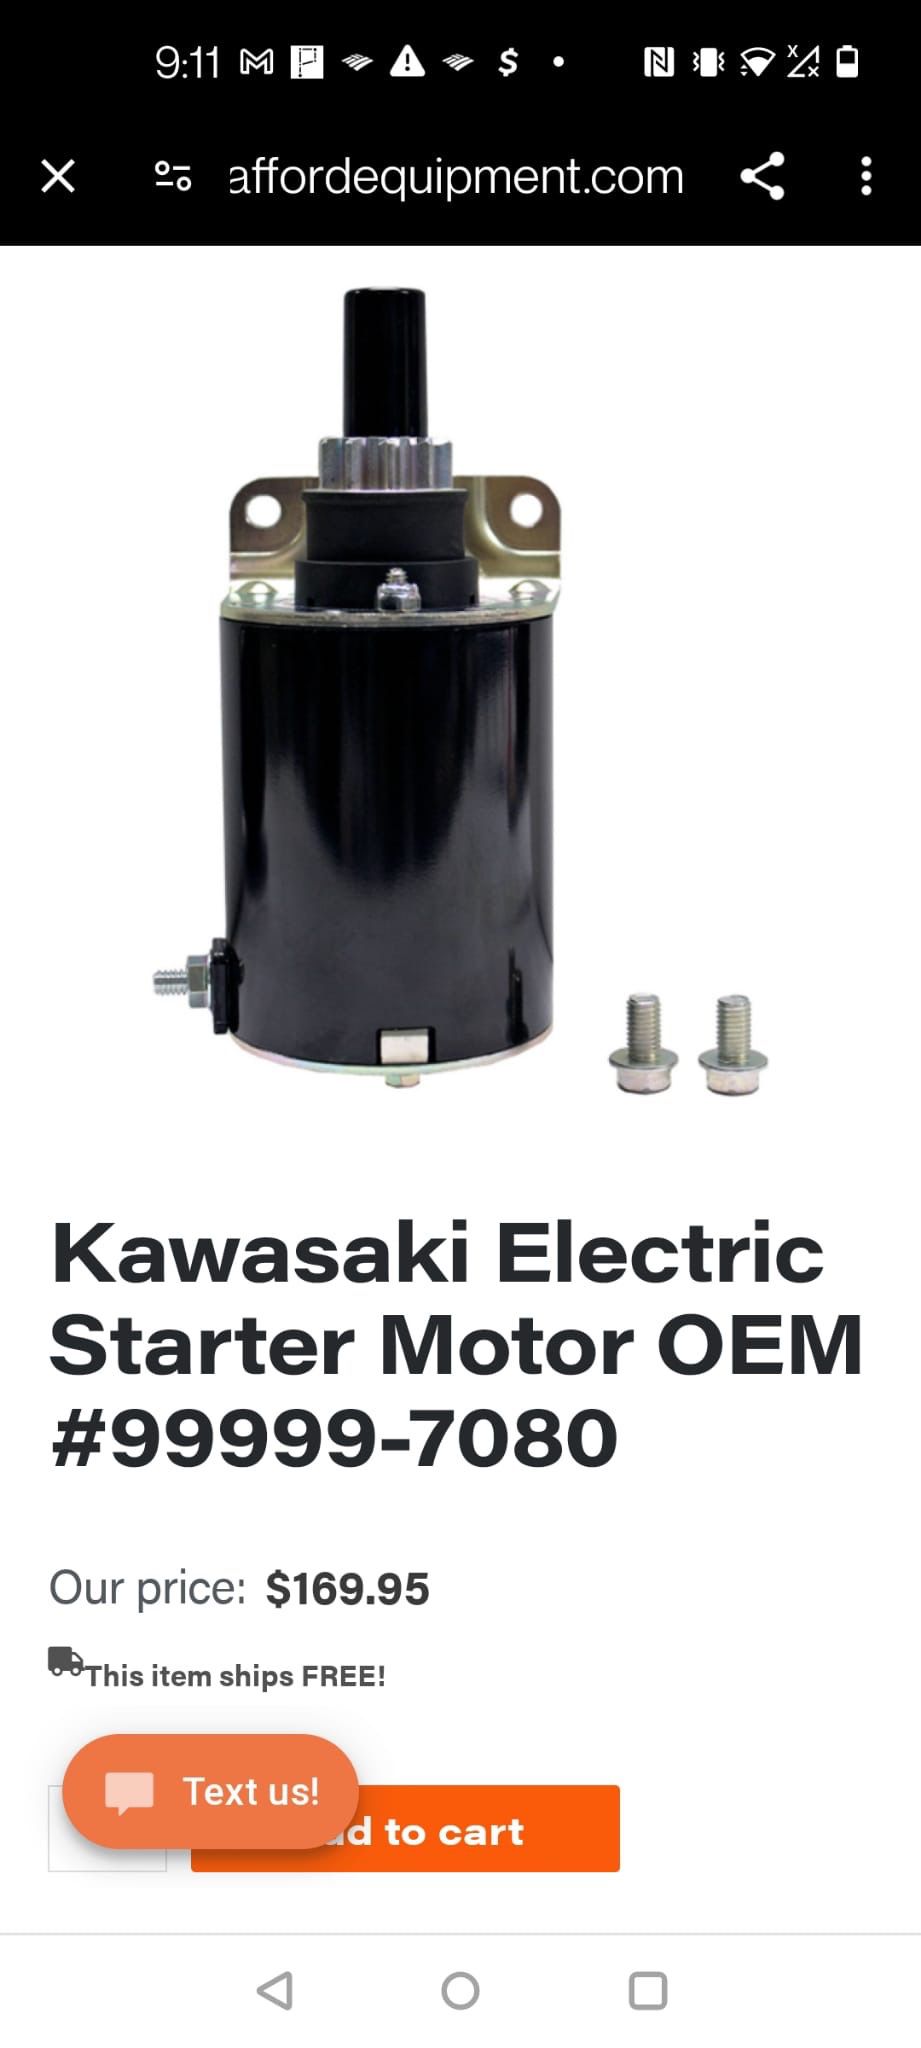 Kawasaki Electric Starter Motor OEM #99(contact info removed)